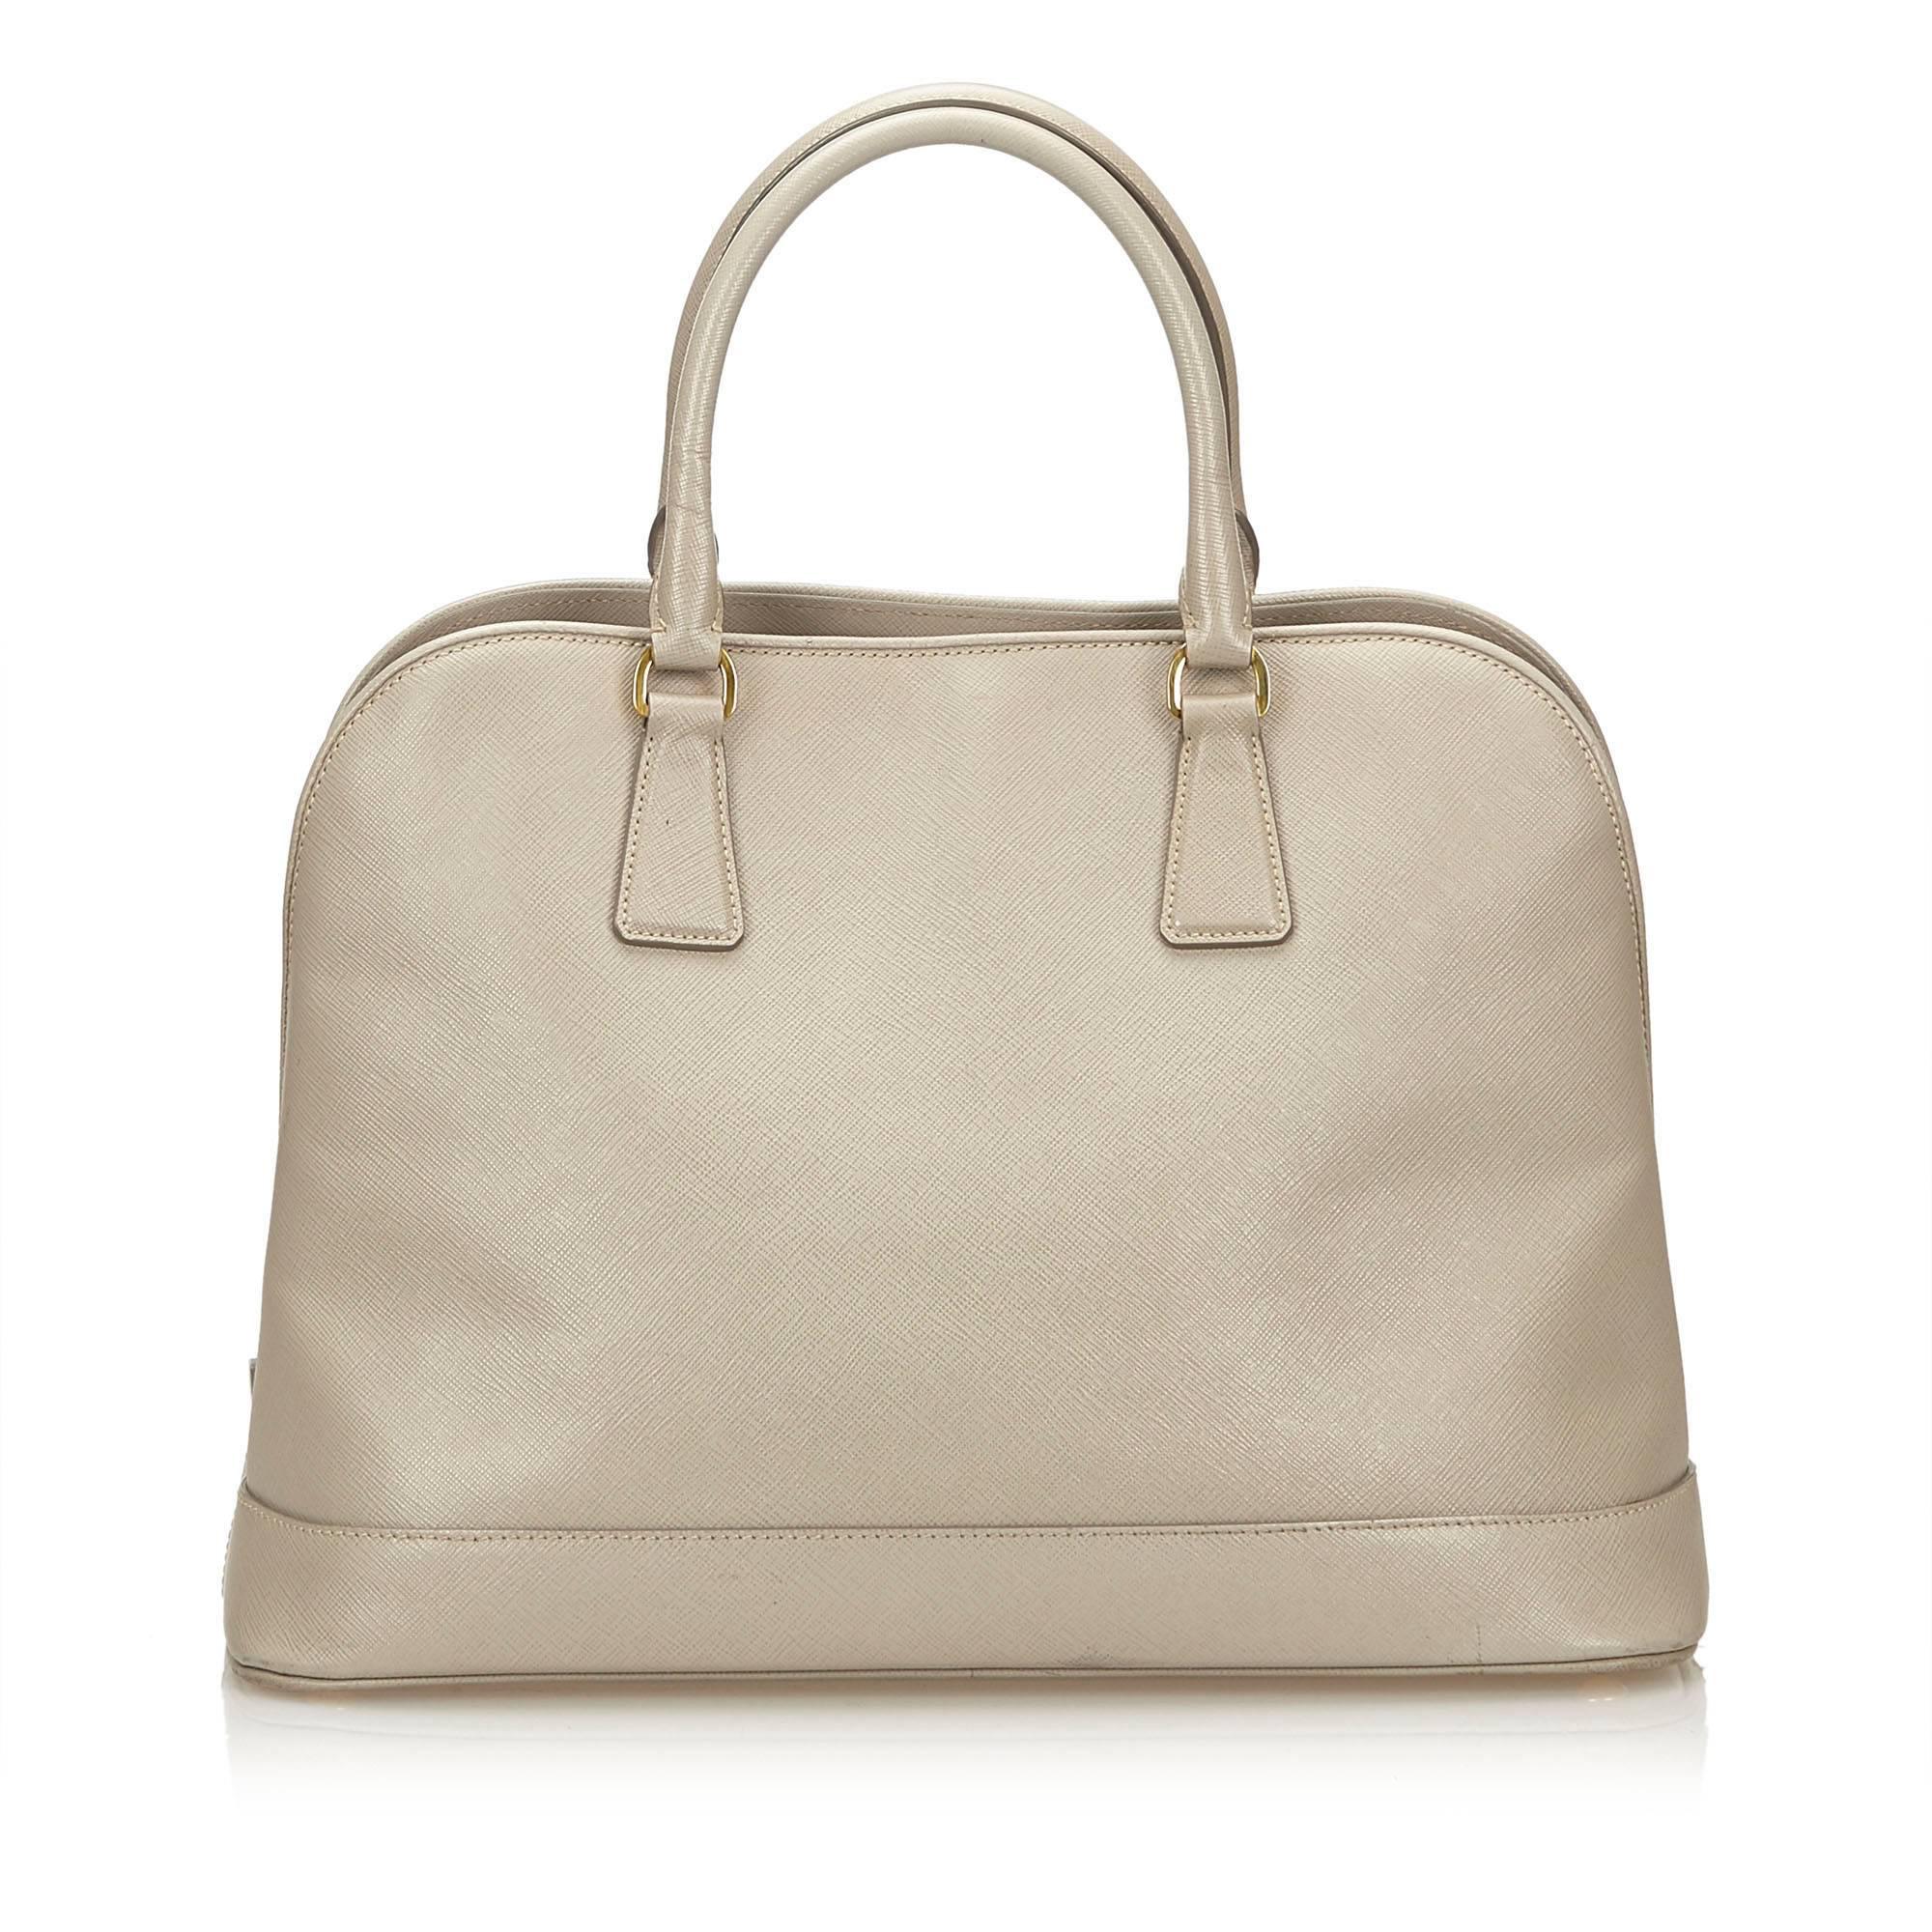 Prada Brown x Beige Saffiano Leather Handbag In Good Condition For Sale In Orlando, FL